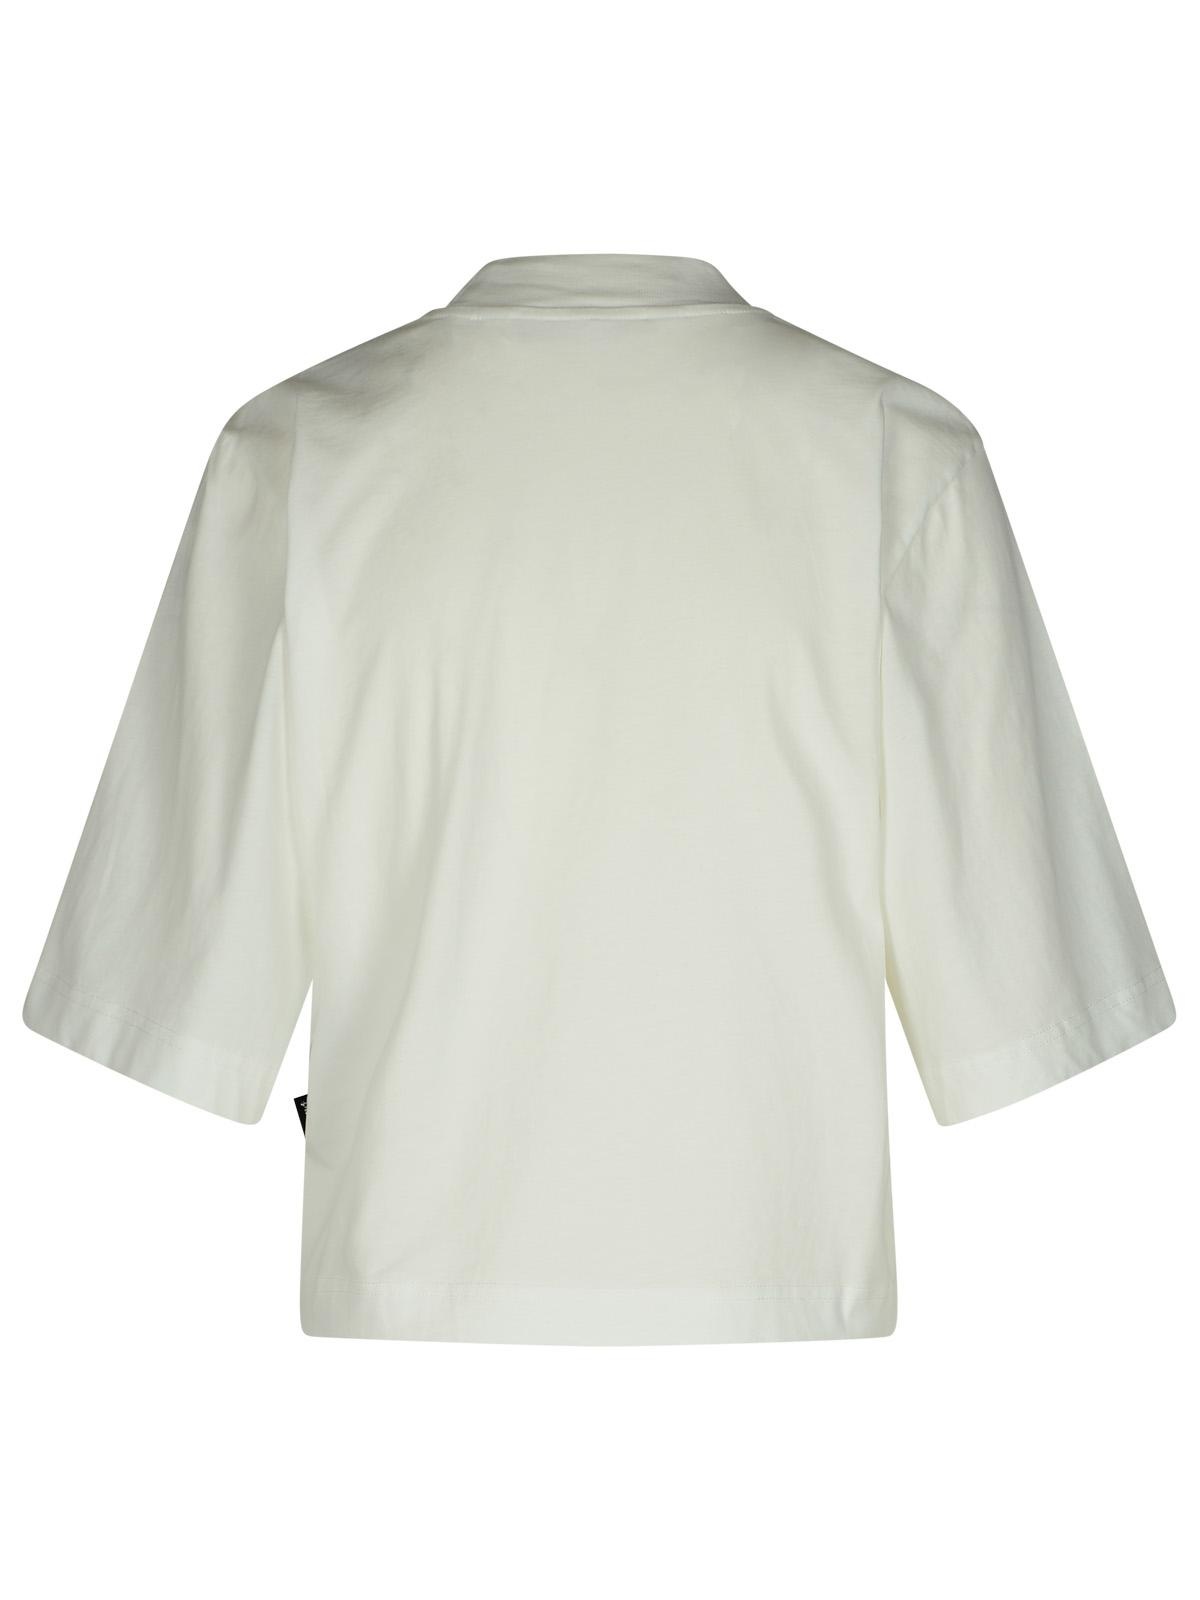 Palm Angels 'Solariz' White Cotton T-Shirt Woman - 3